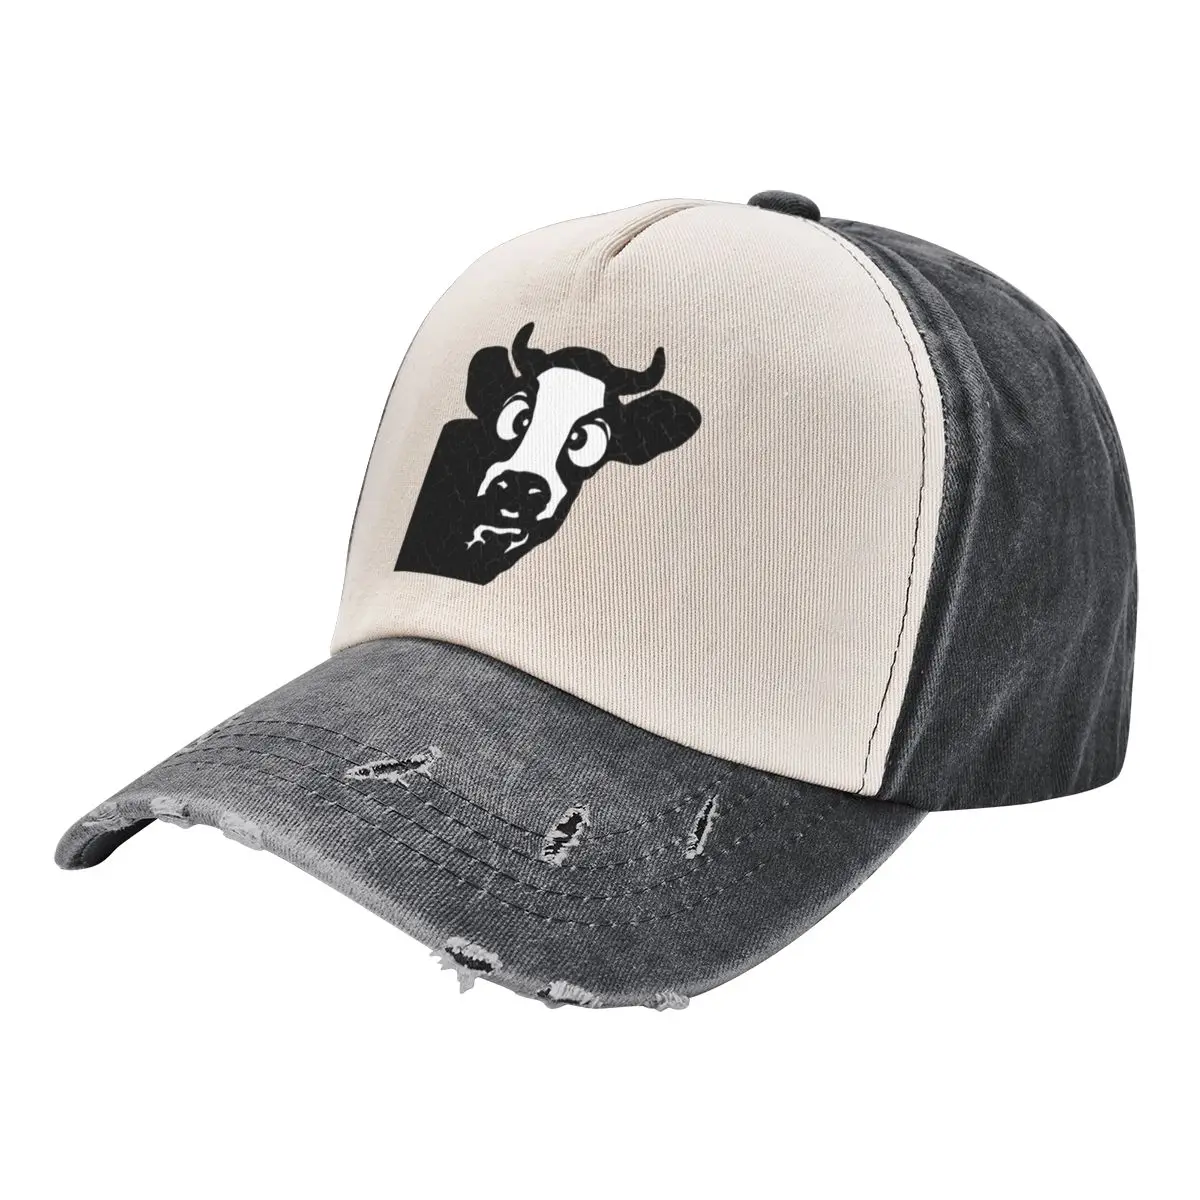 

Cross Eyed Cow Baseball Cap custom Hat New In The Hat Trucker Hat Golf Cap Men Caps Women's